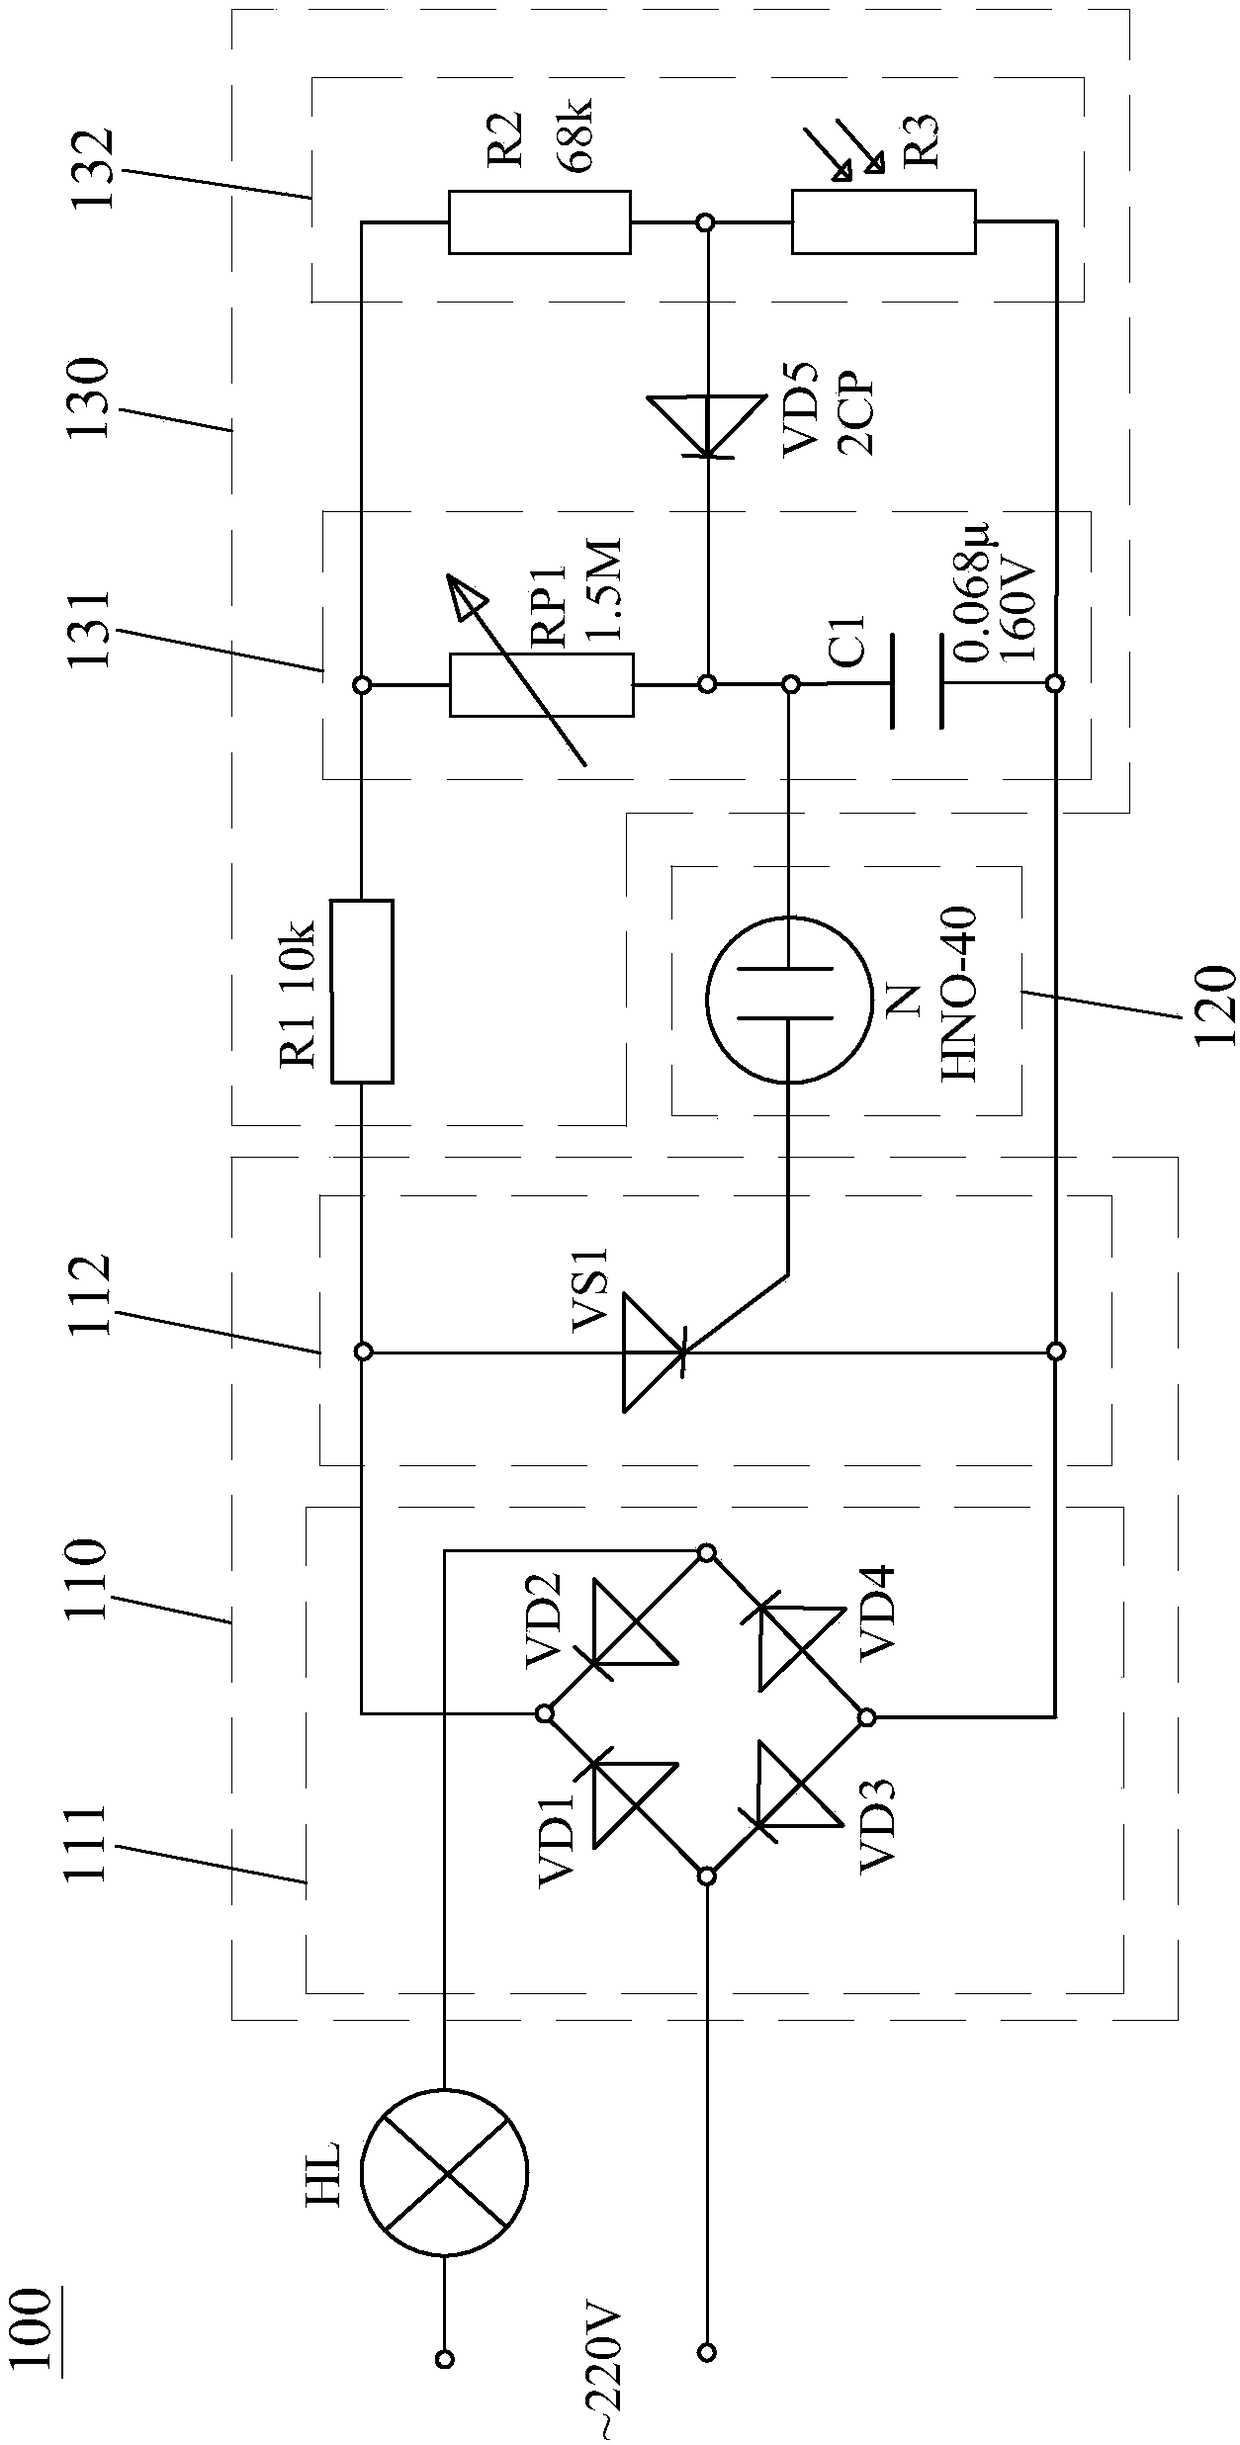 Automatic control circuit for sightseeing elevator car illumination